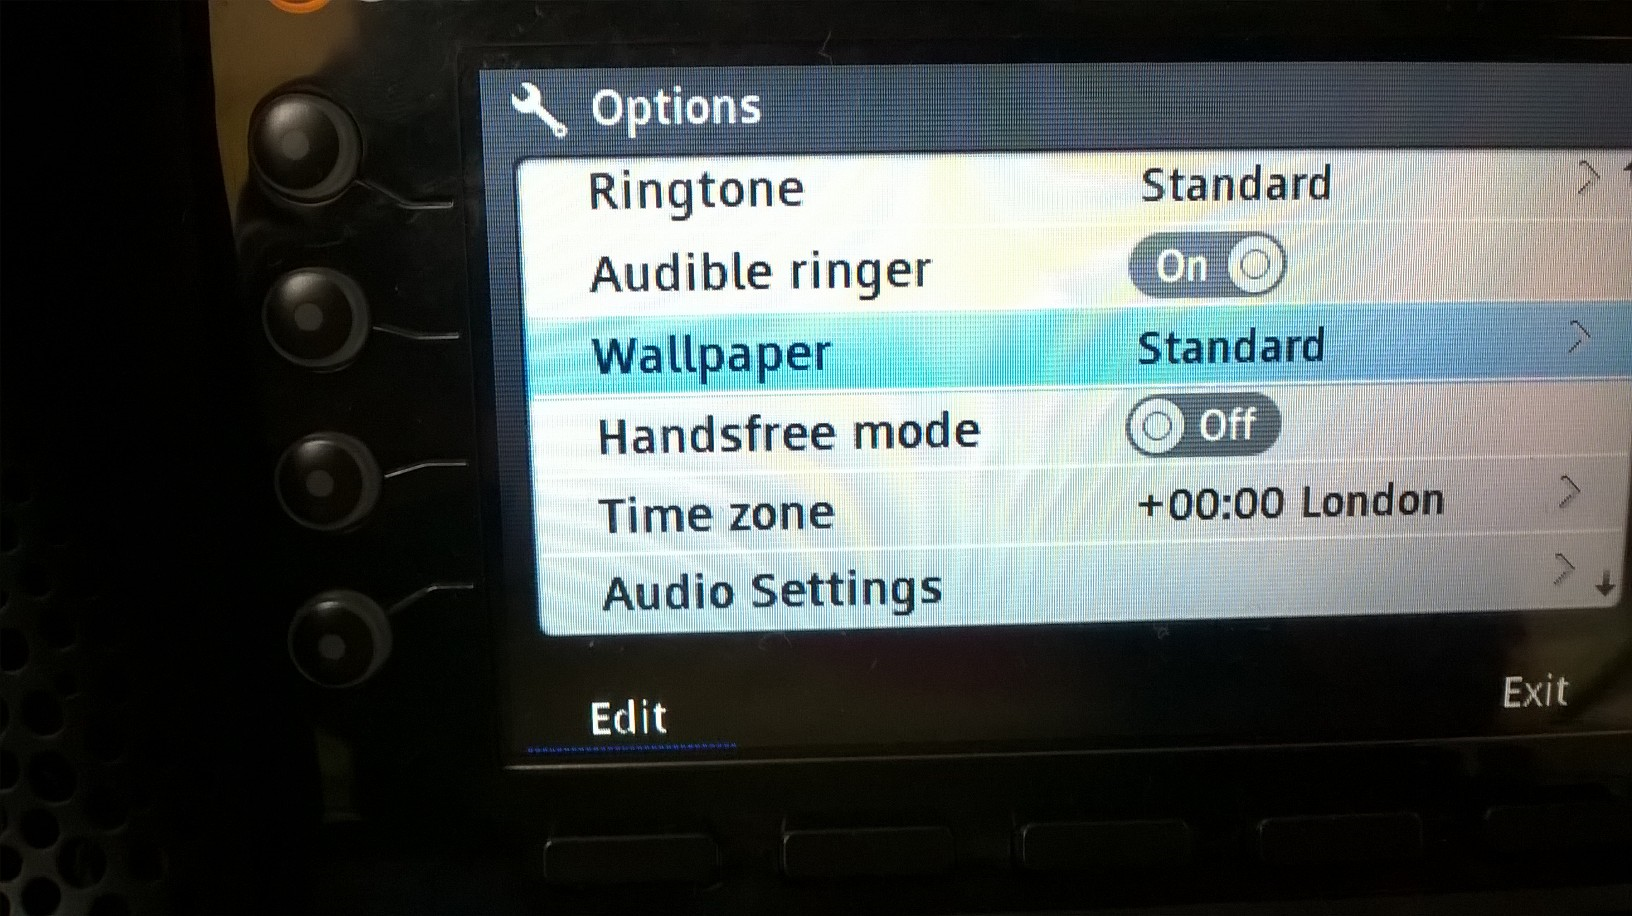 Shoretel phone handsfree mode setting